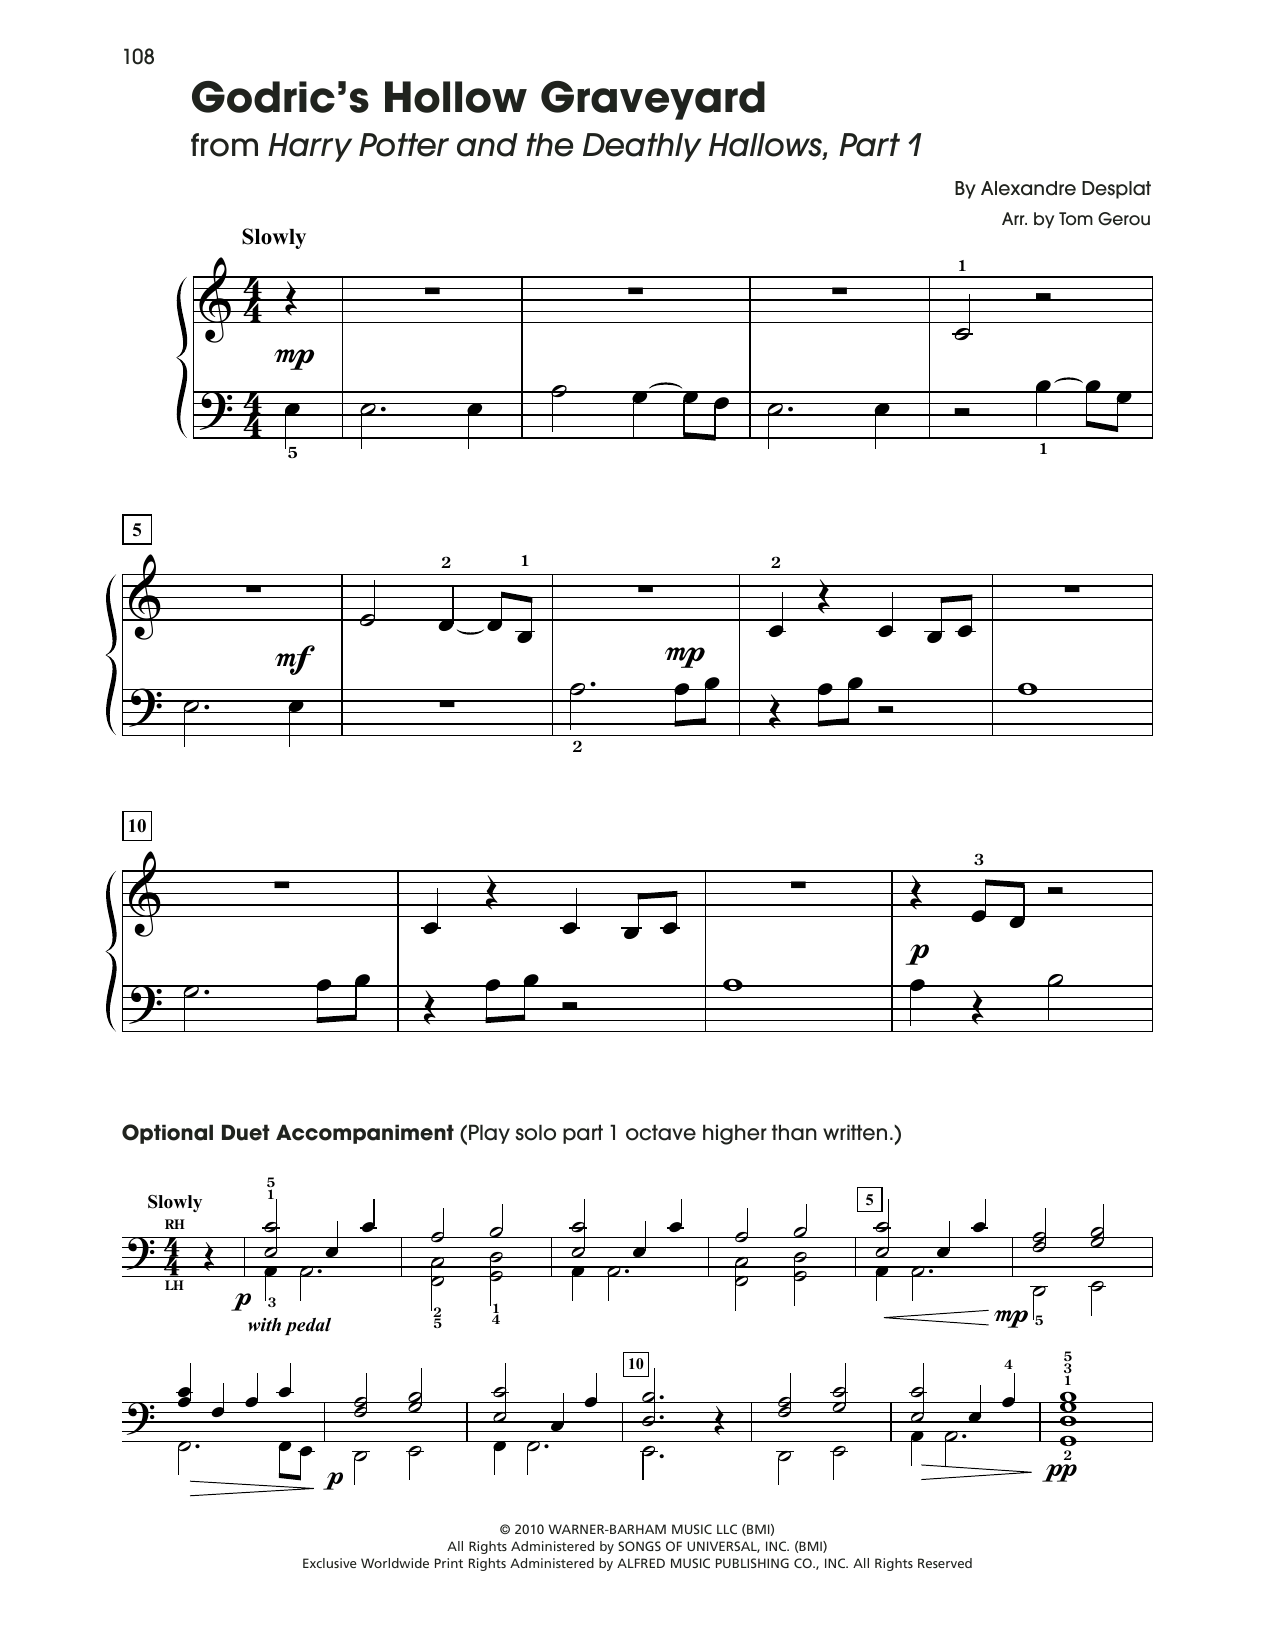 Alexandre Desplat Godric's Hollow Graveyard (from Harry Potter) (arr. Tom Gerou) Sheet Music Notes & Chords for 5-Finger Piano - Download or Print PDF